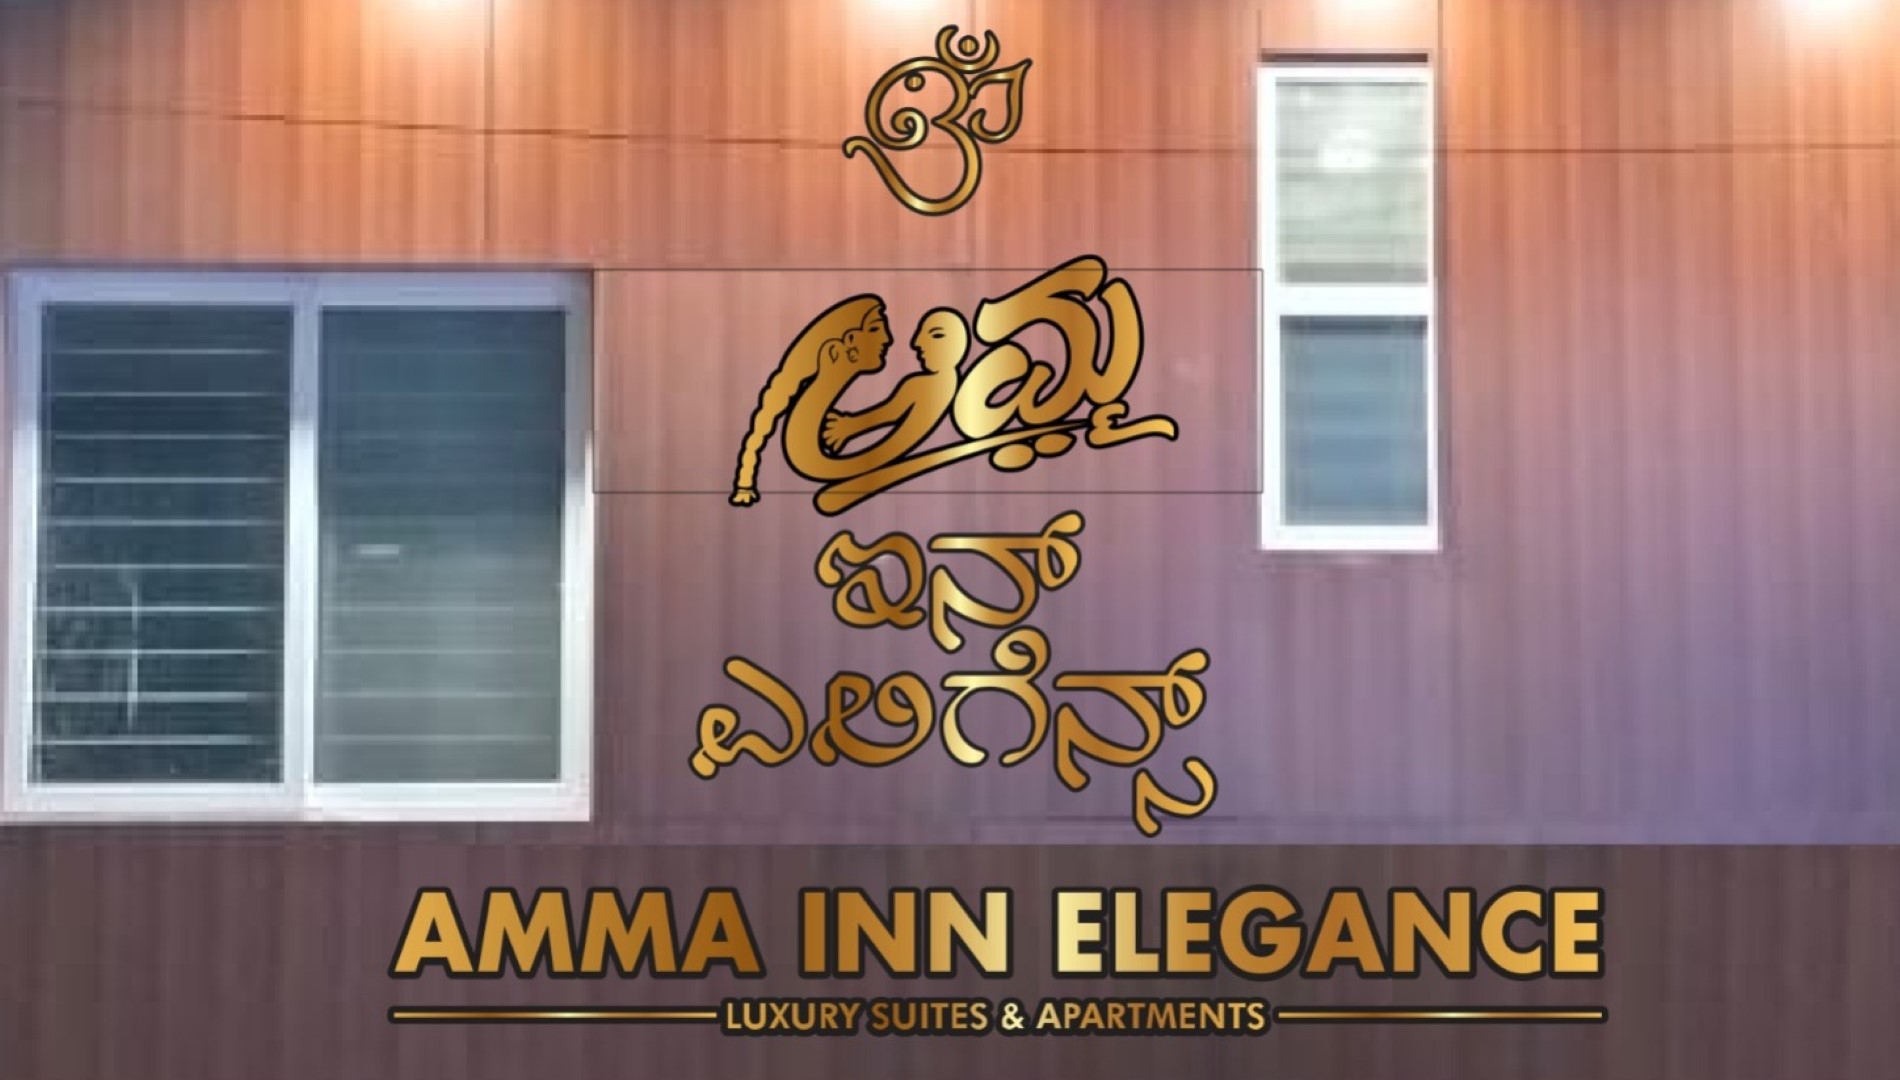 Amma Inn Elegance About Us Image